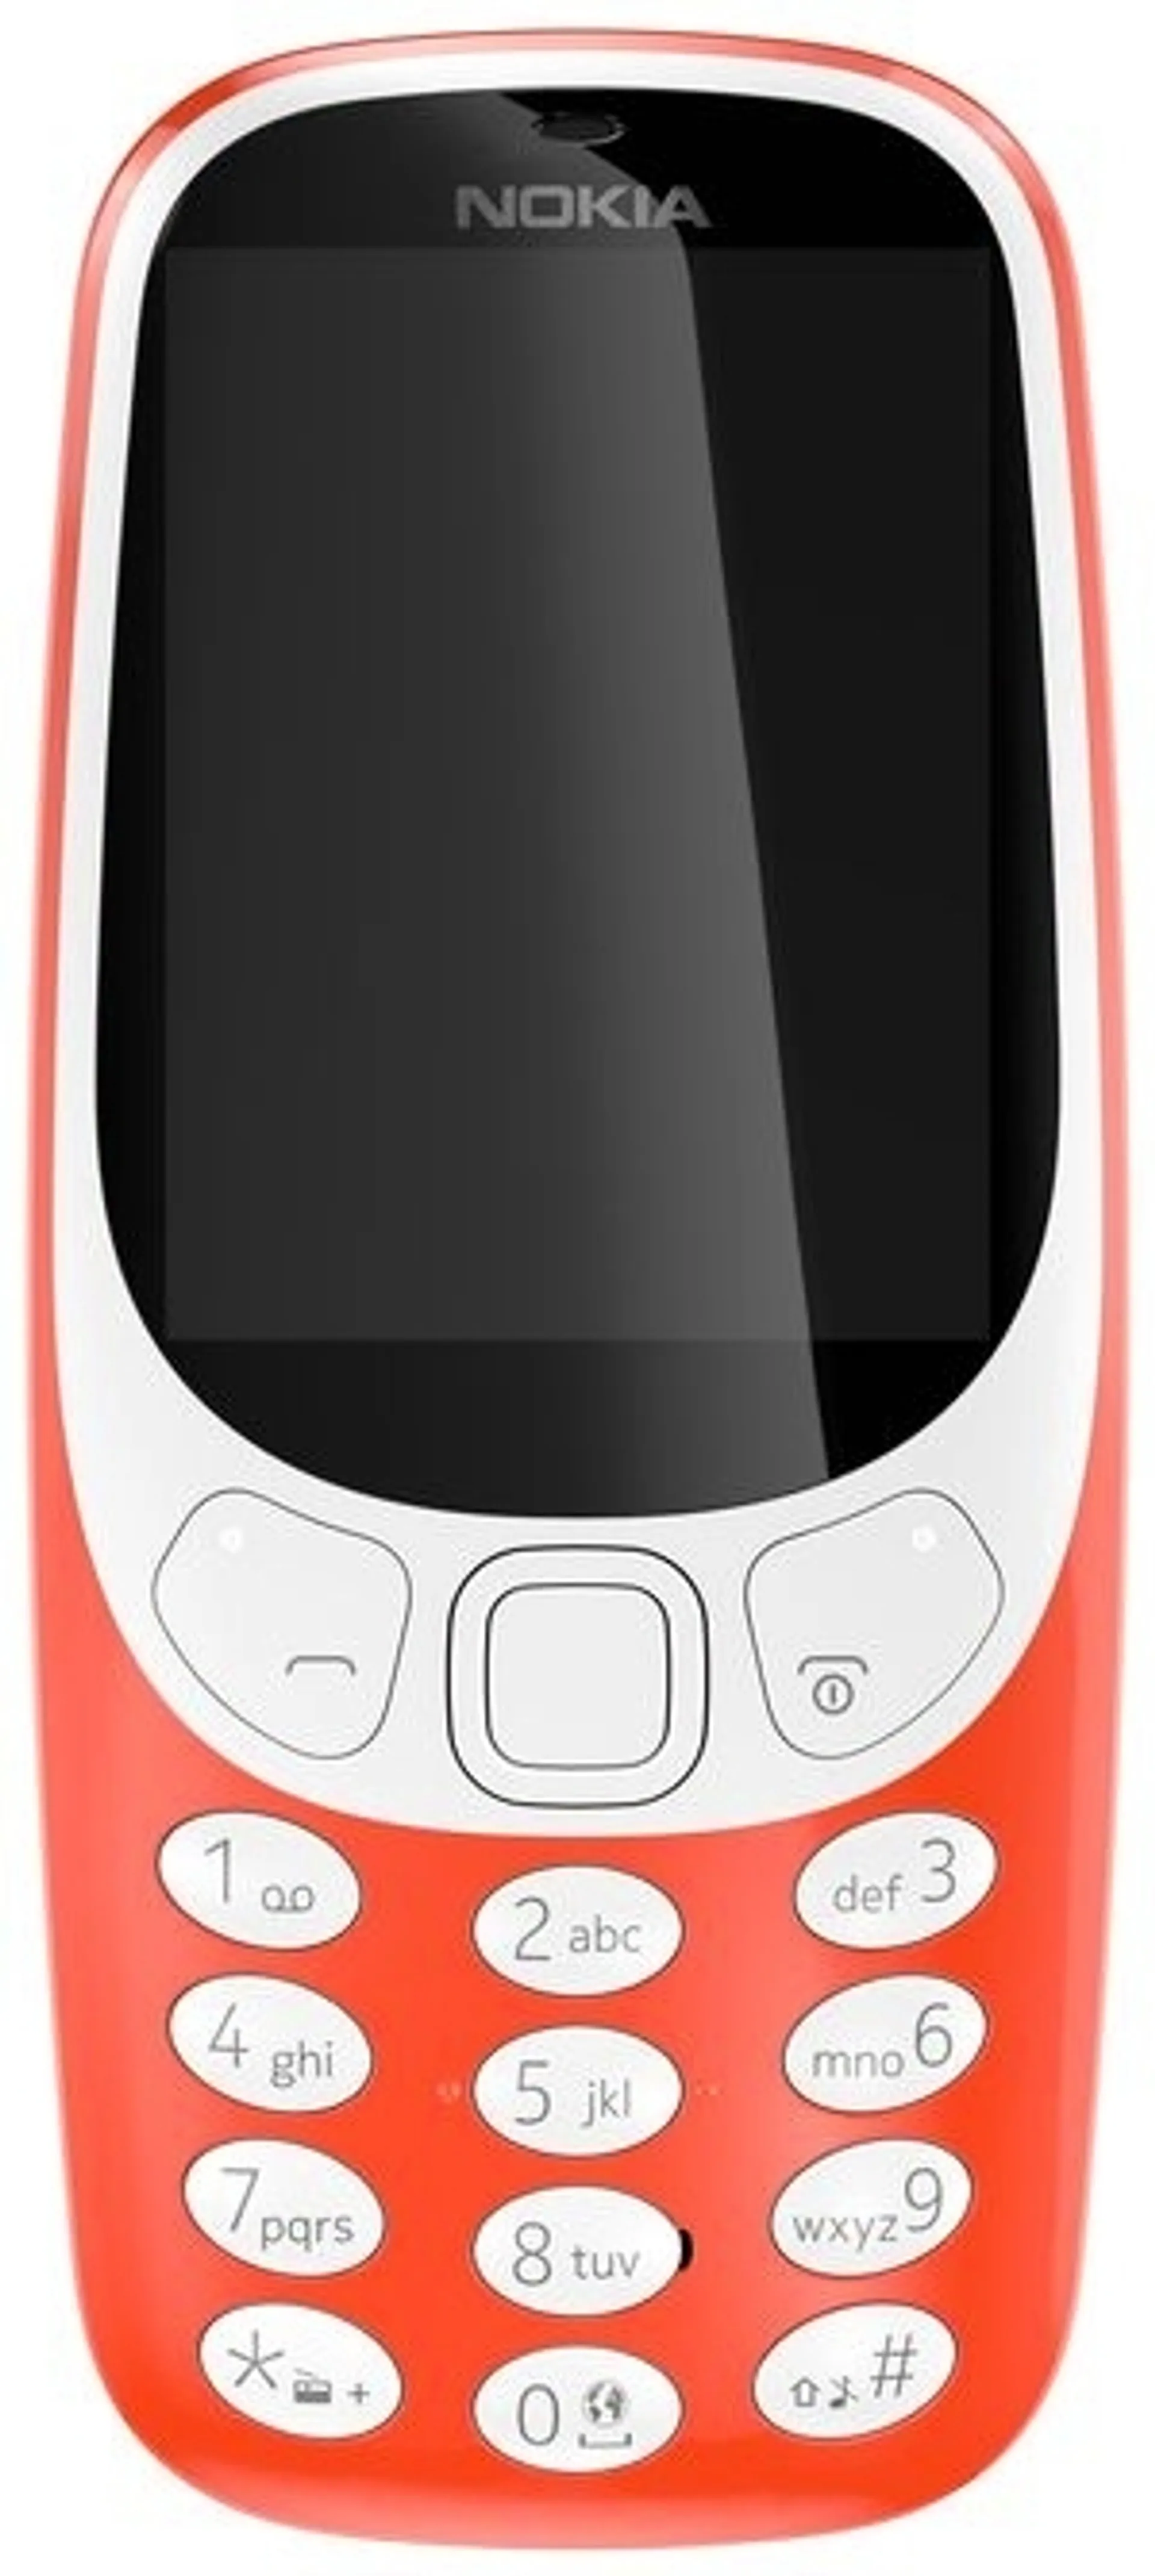 Nokia 3310 dual-sim 2G matkapuhelin punainen - 1